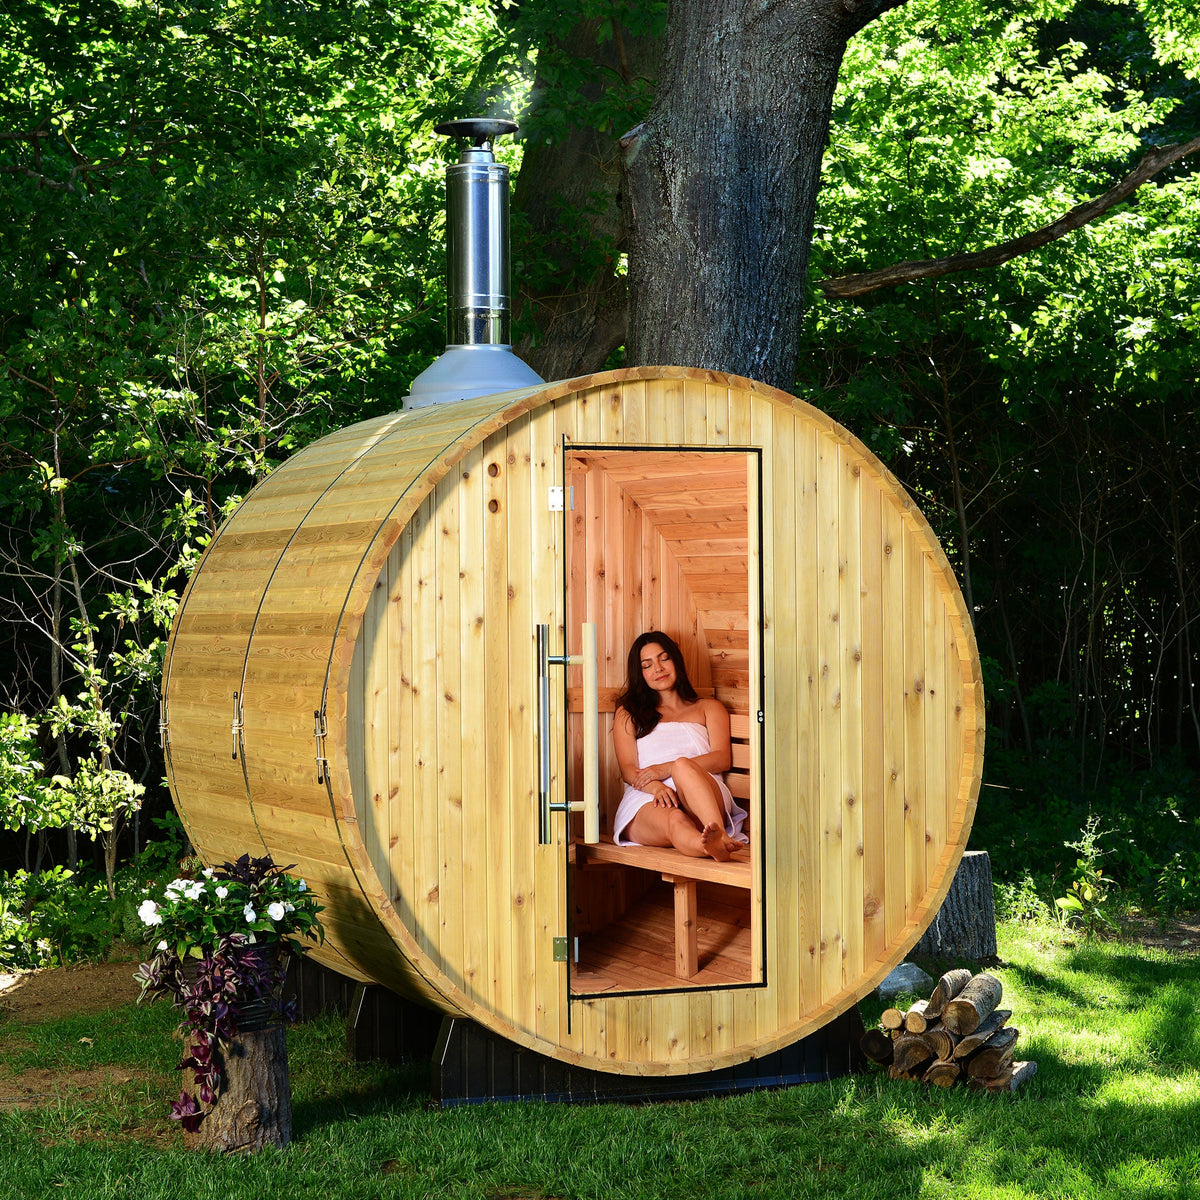 Almost Heaven Seneca 6-Person Barrel Sauna-Traditional Saunas-Nordica Sauna